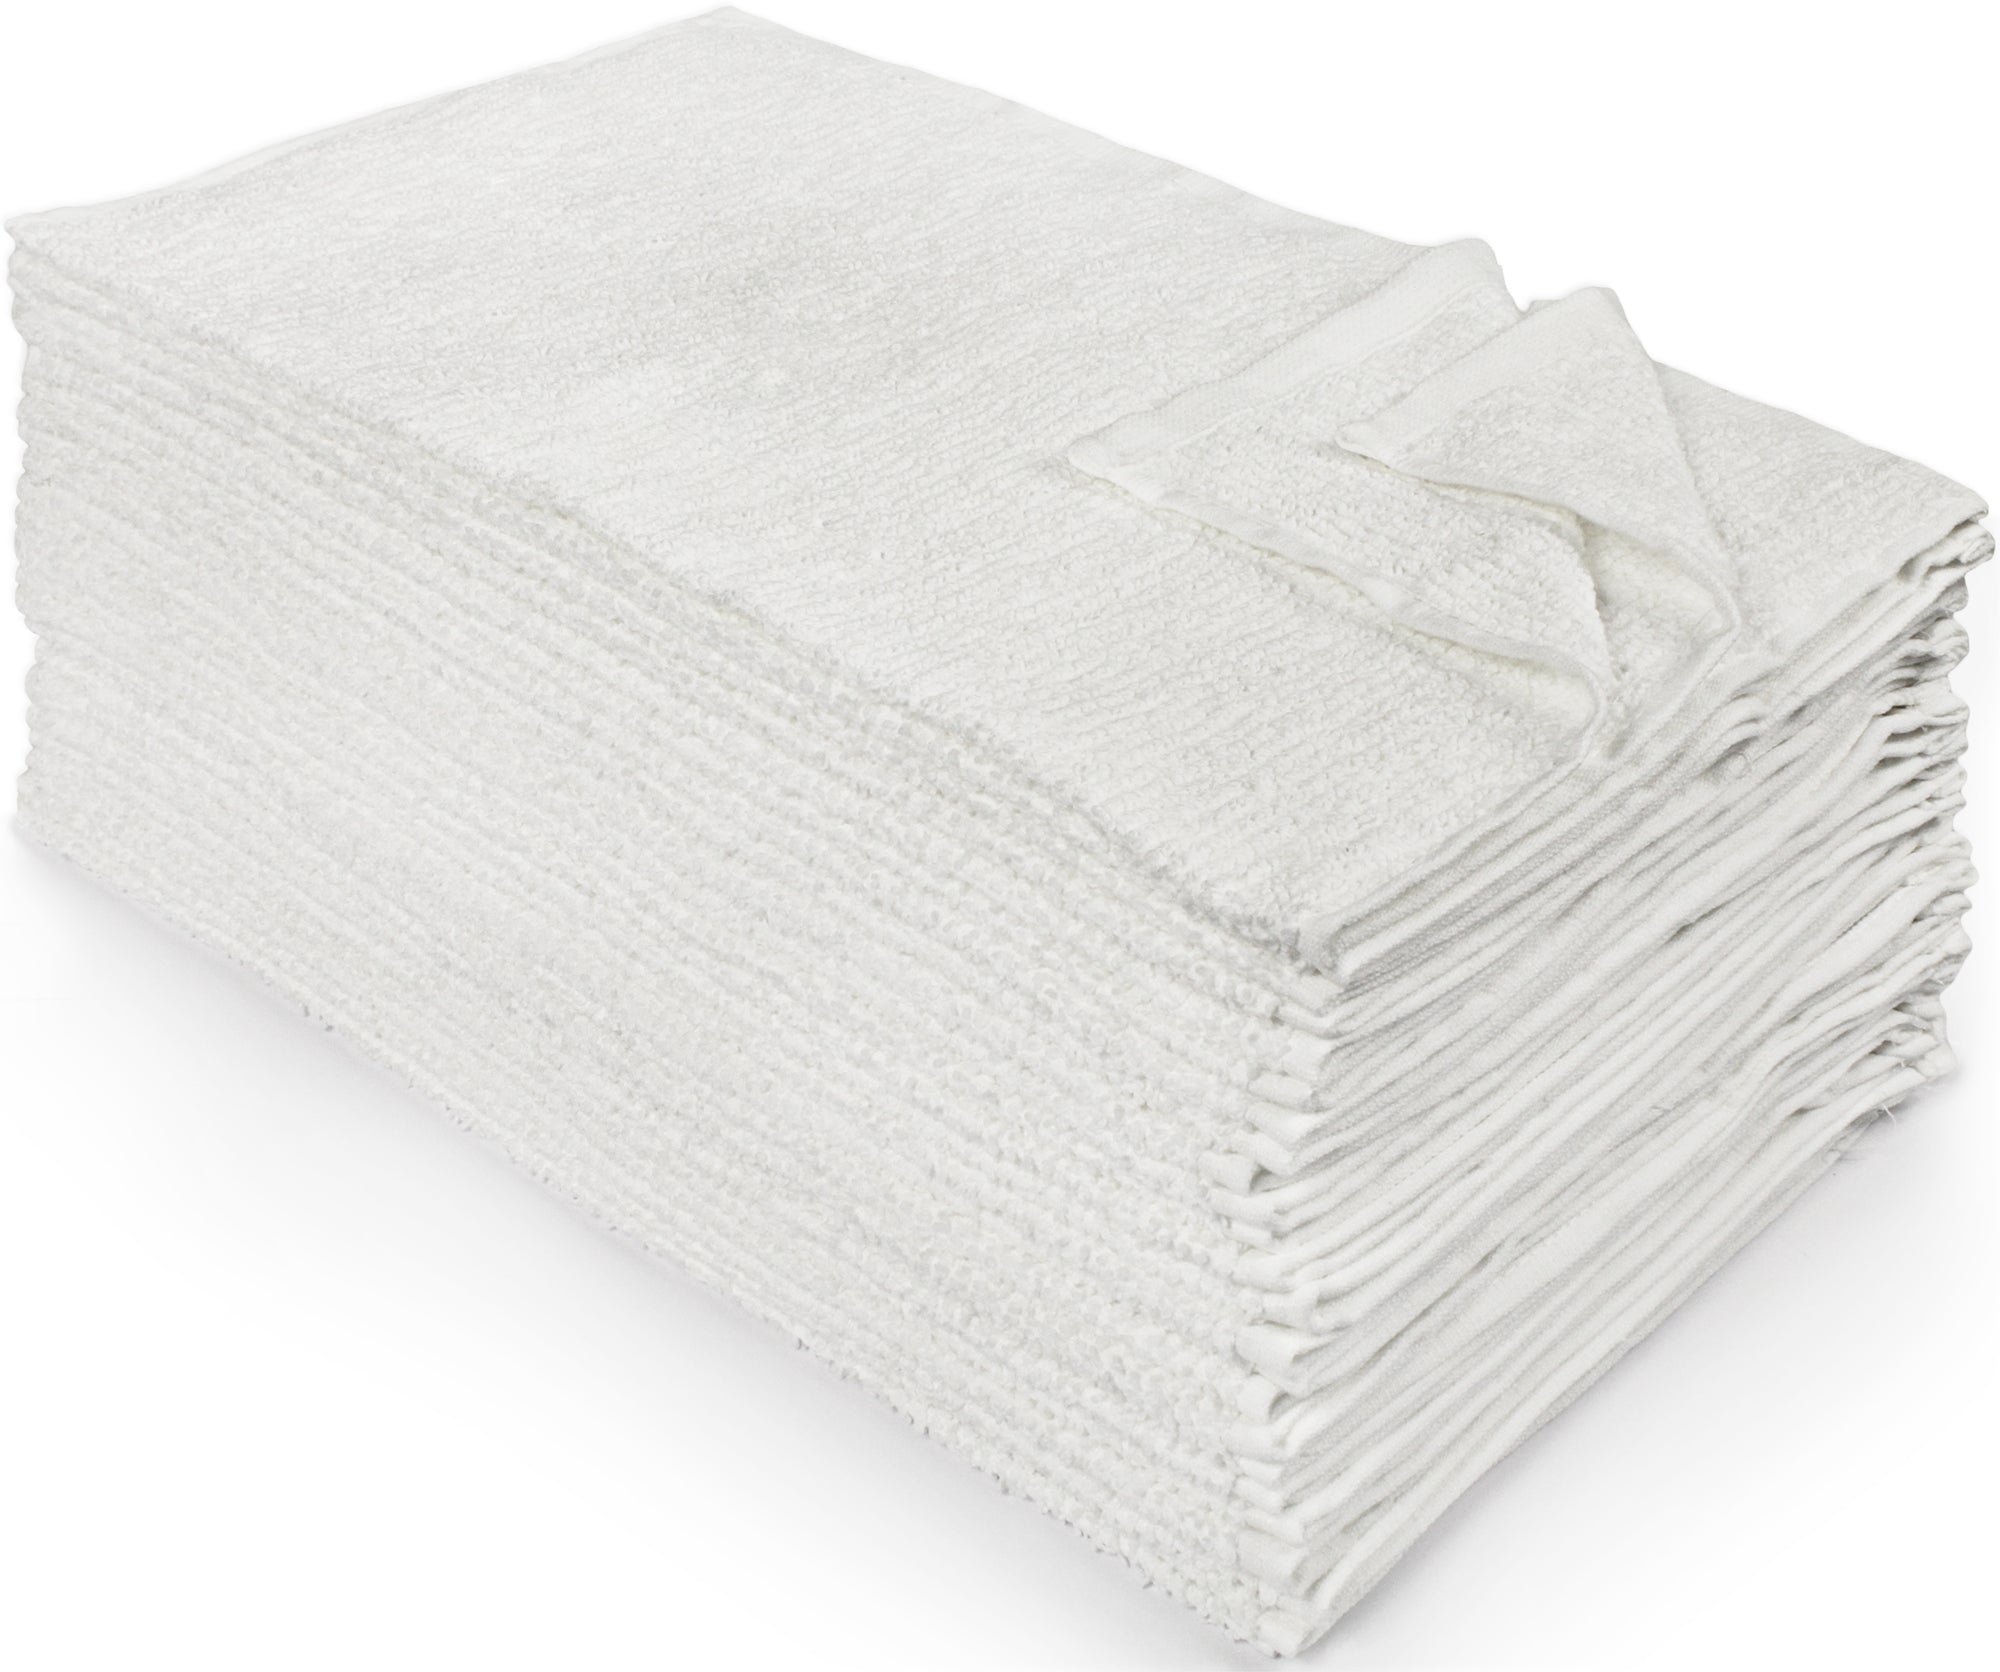 28oz Bar Mop Towels 16x19, 100% Cotton, Commercial Grade Professional Kitchen/Re